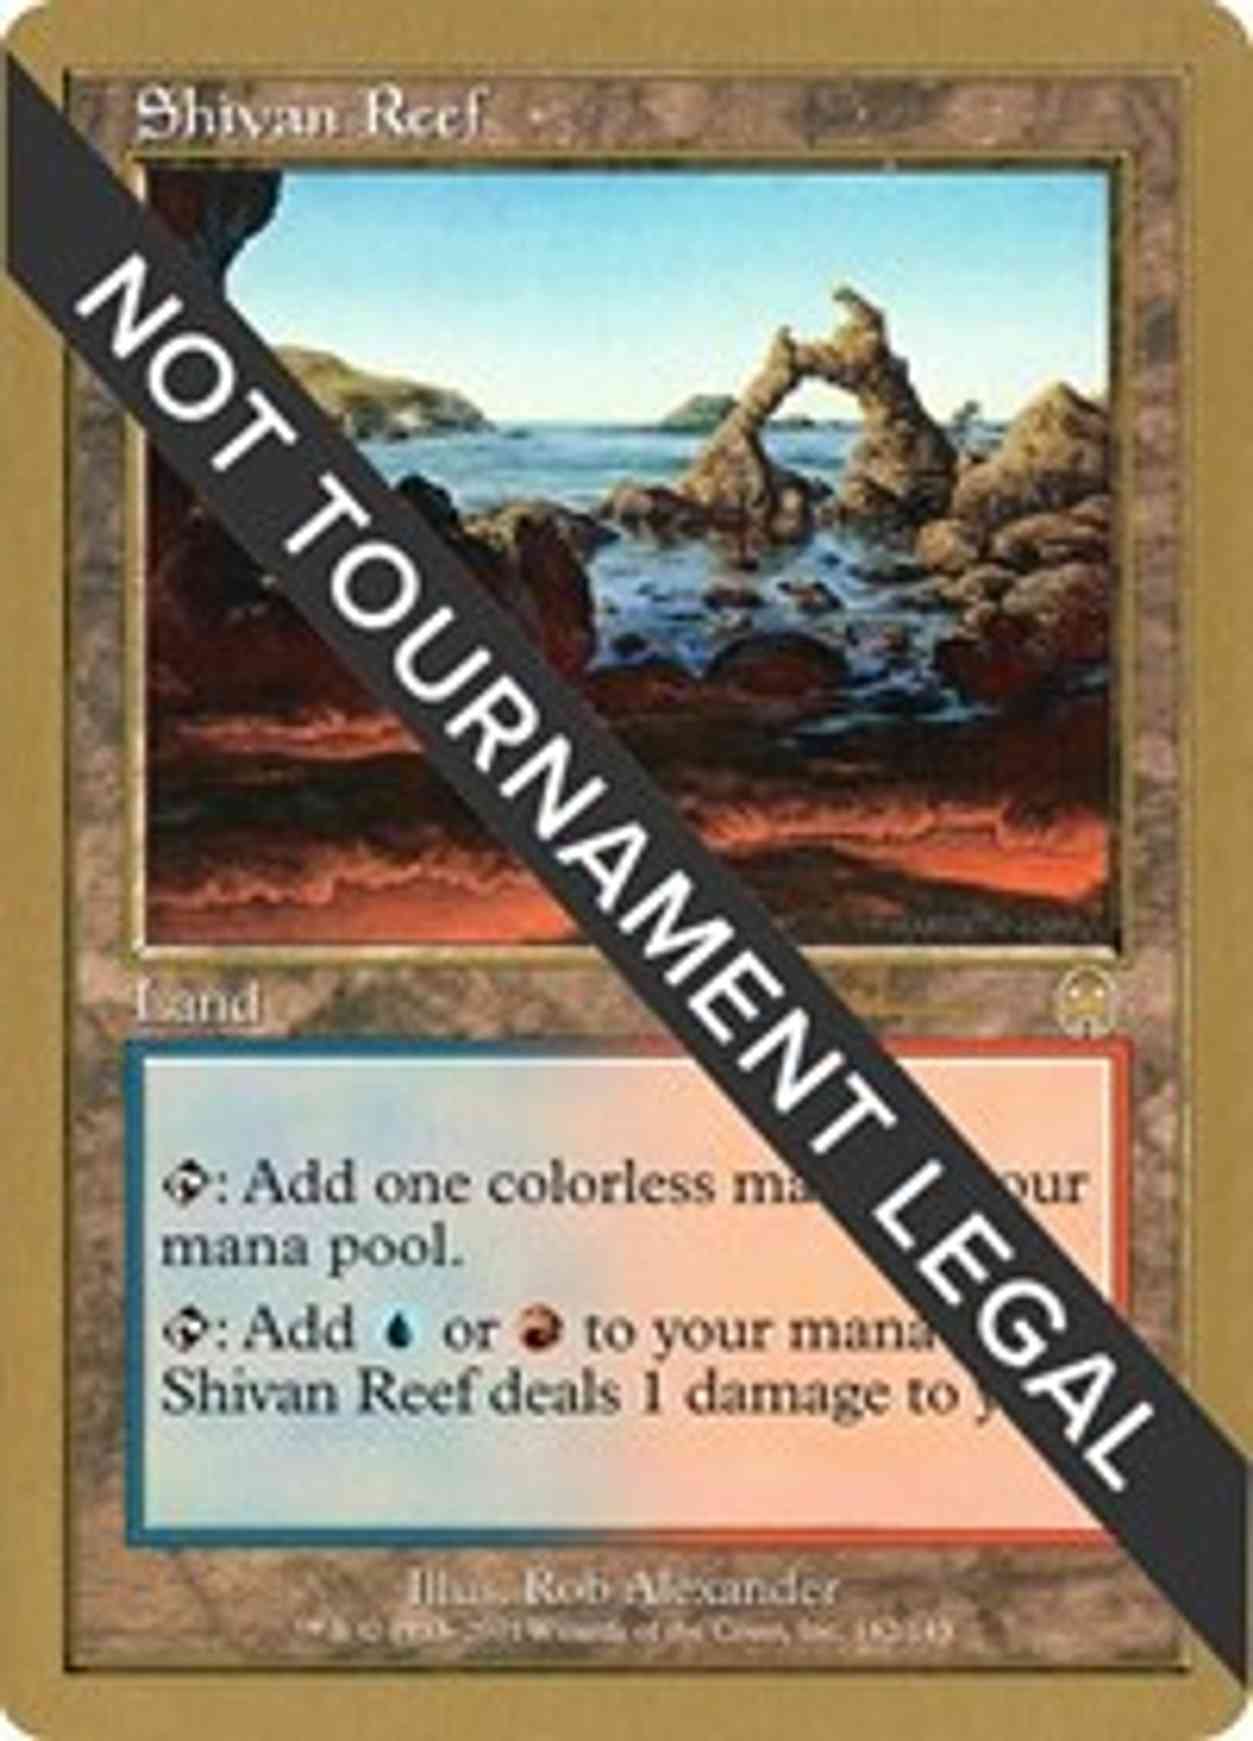 Shivan Reef - 2001 Antoine Ruel (APC) magic card front